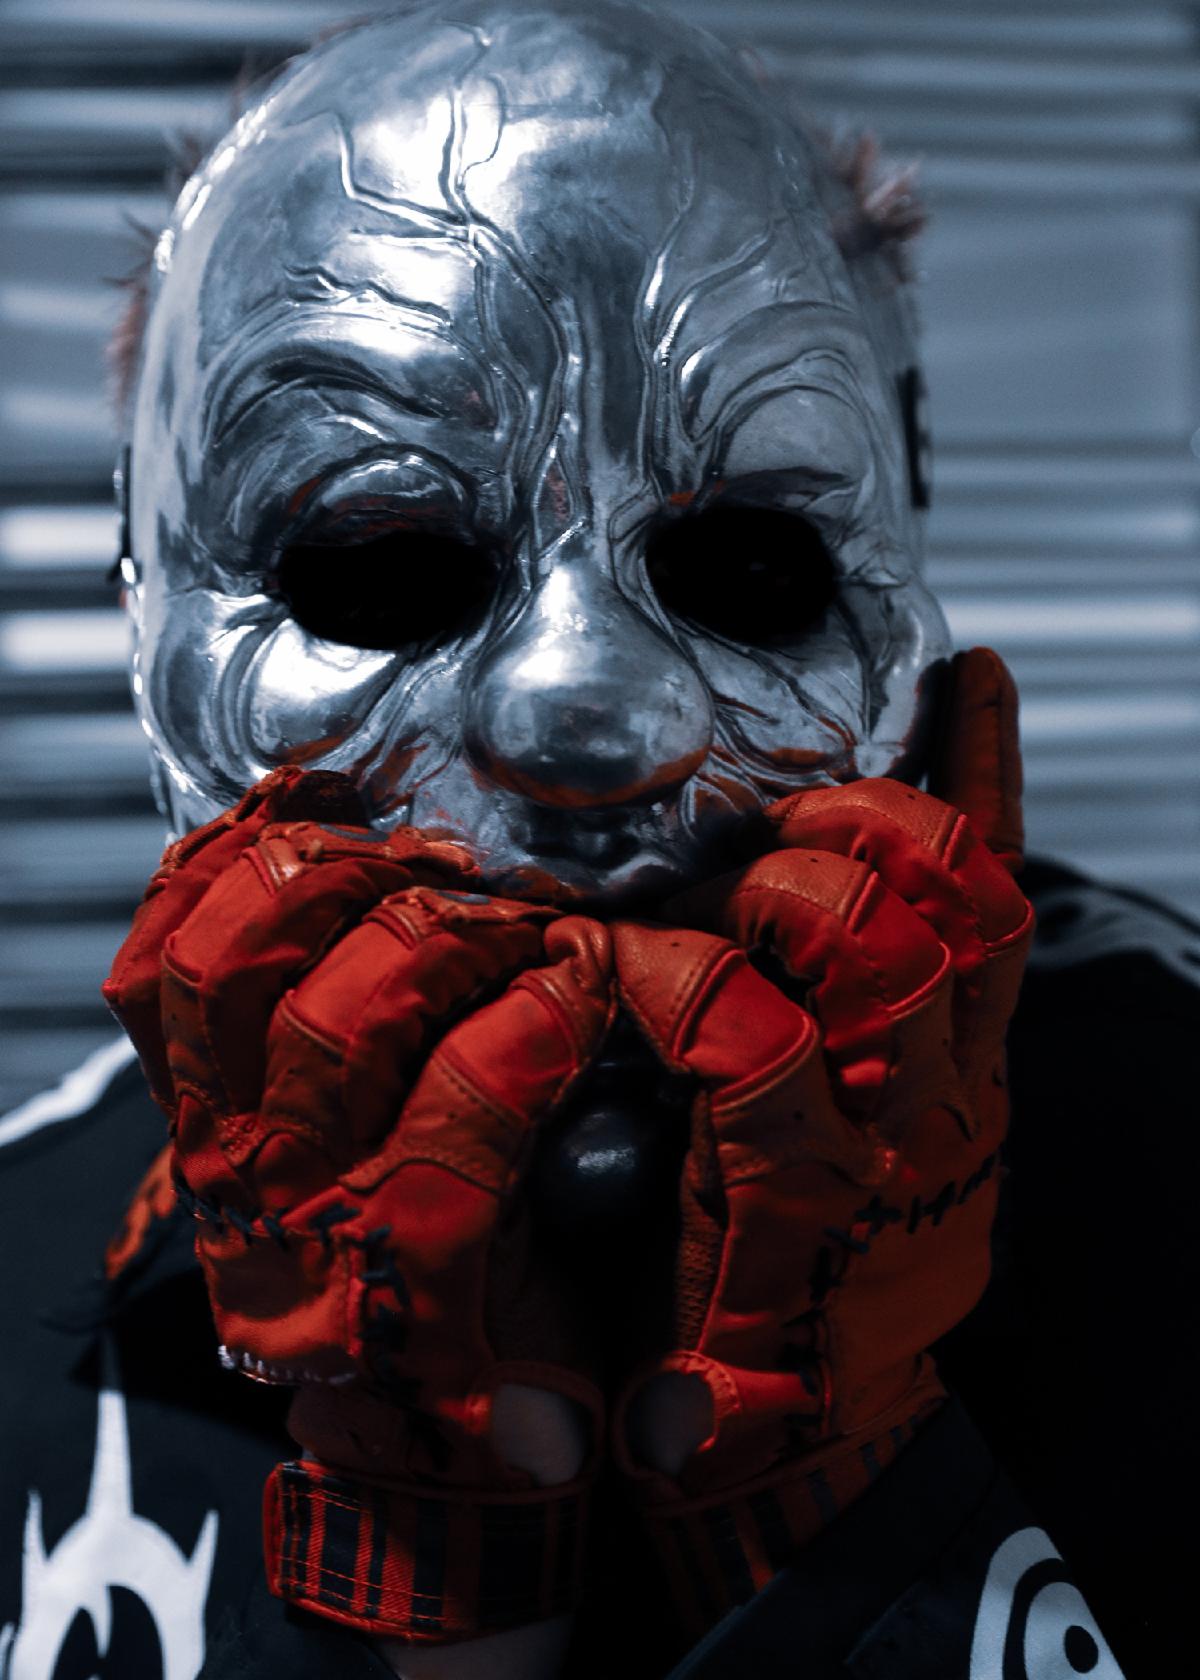 Slipknot's Clown To Release Clown Cannabis